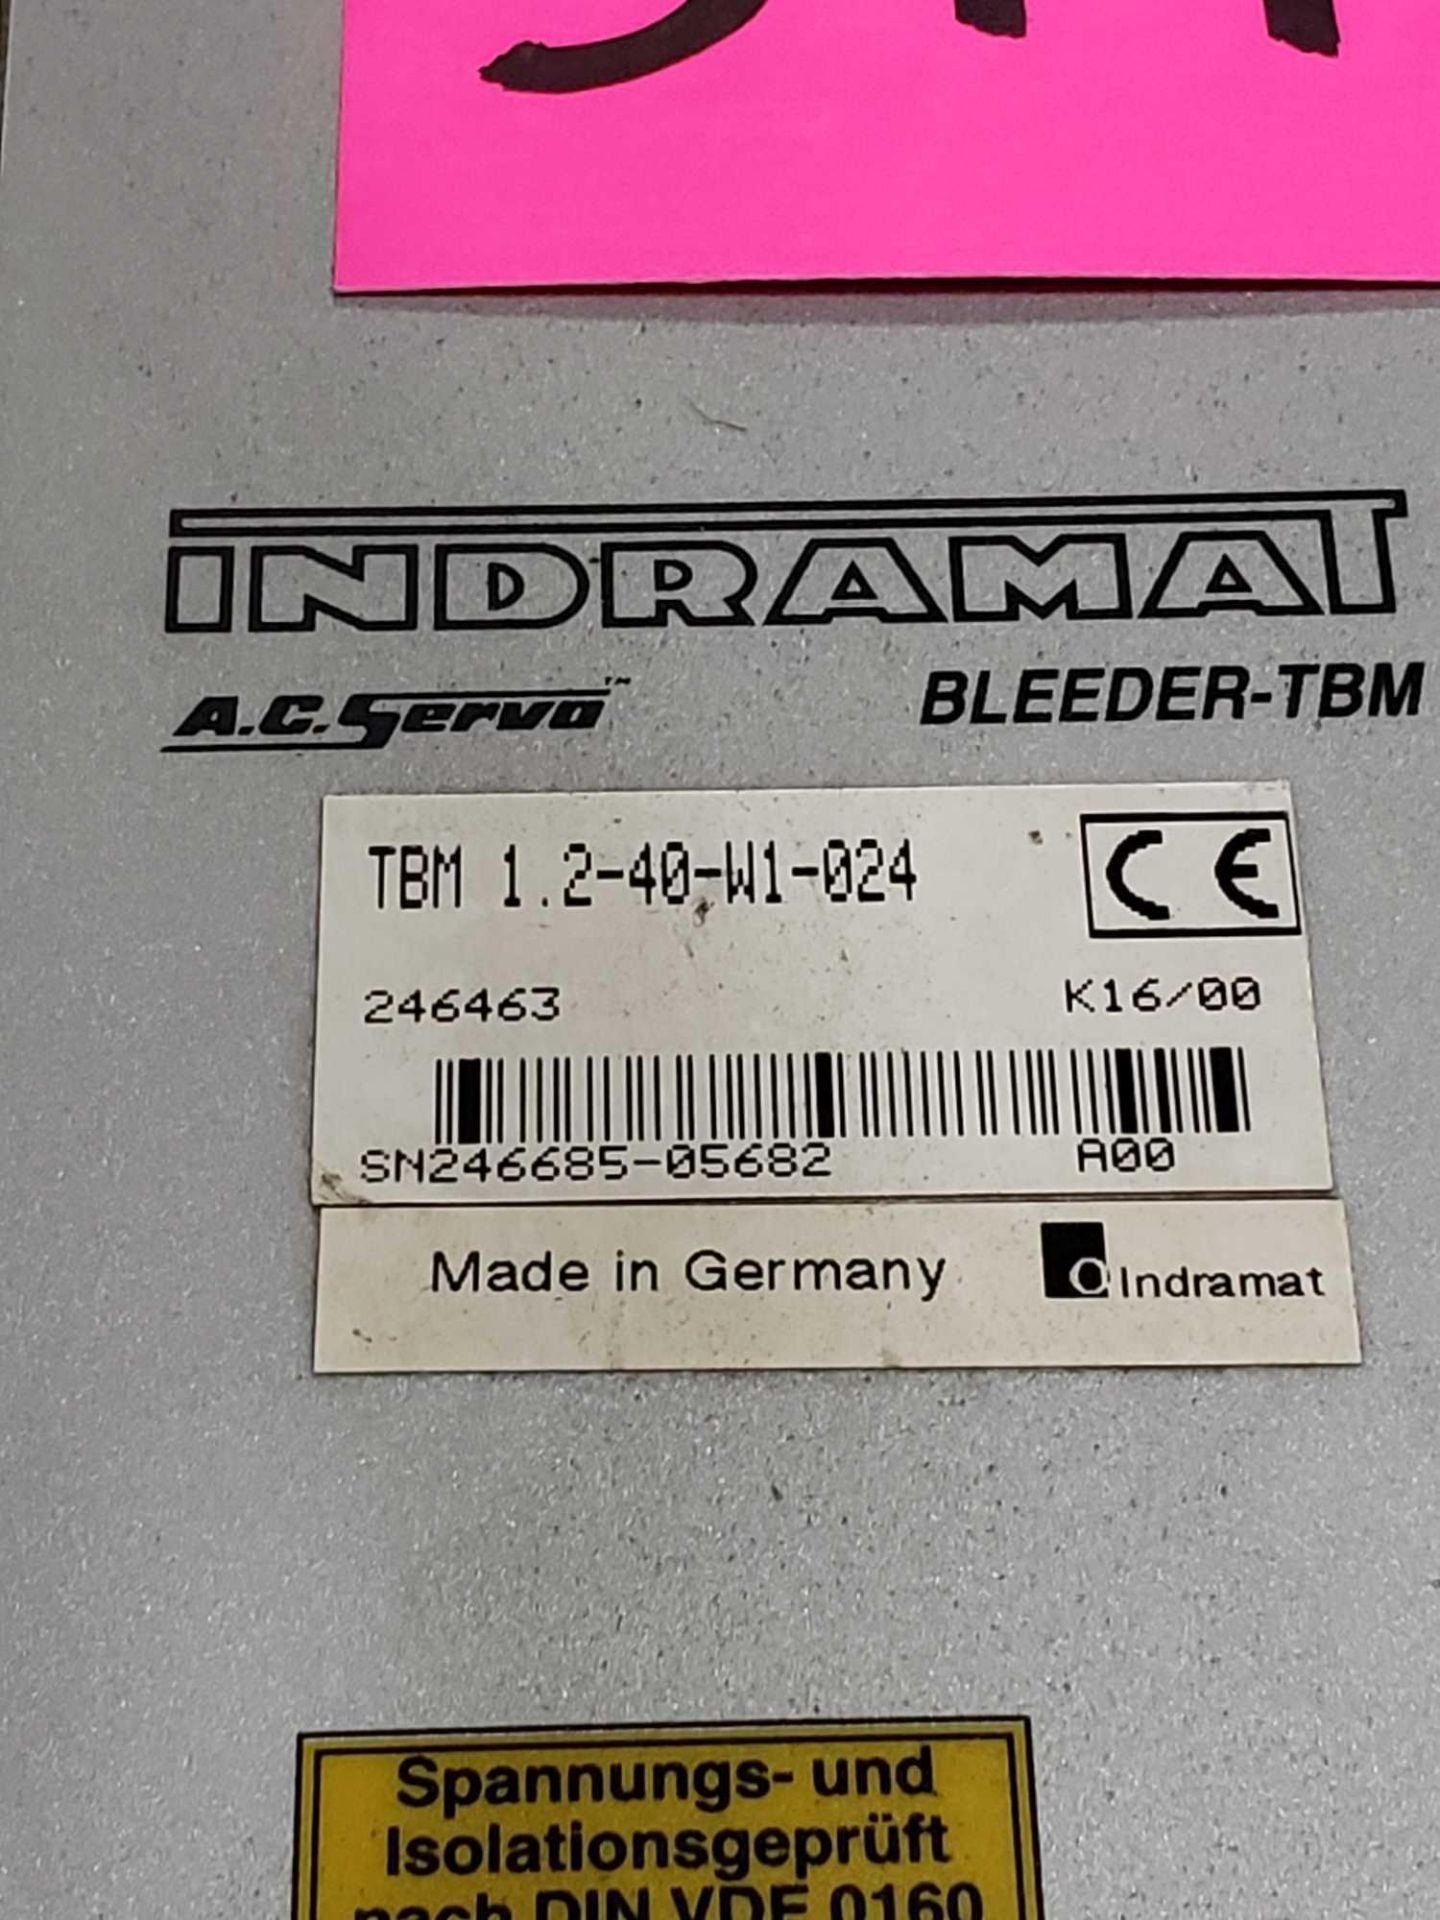 Indramat AC Servo Bleeder-TBM. Model TBM1.2-40-W1-024. - Image 2 of 3